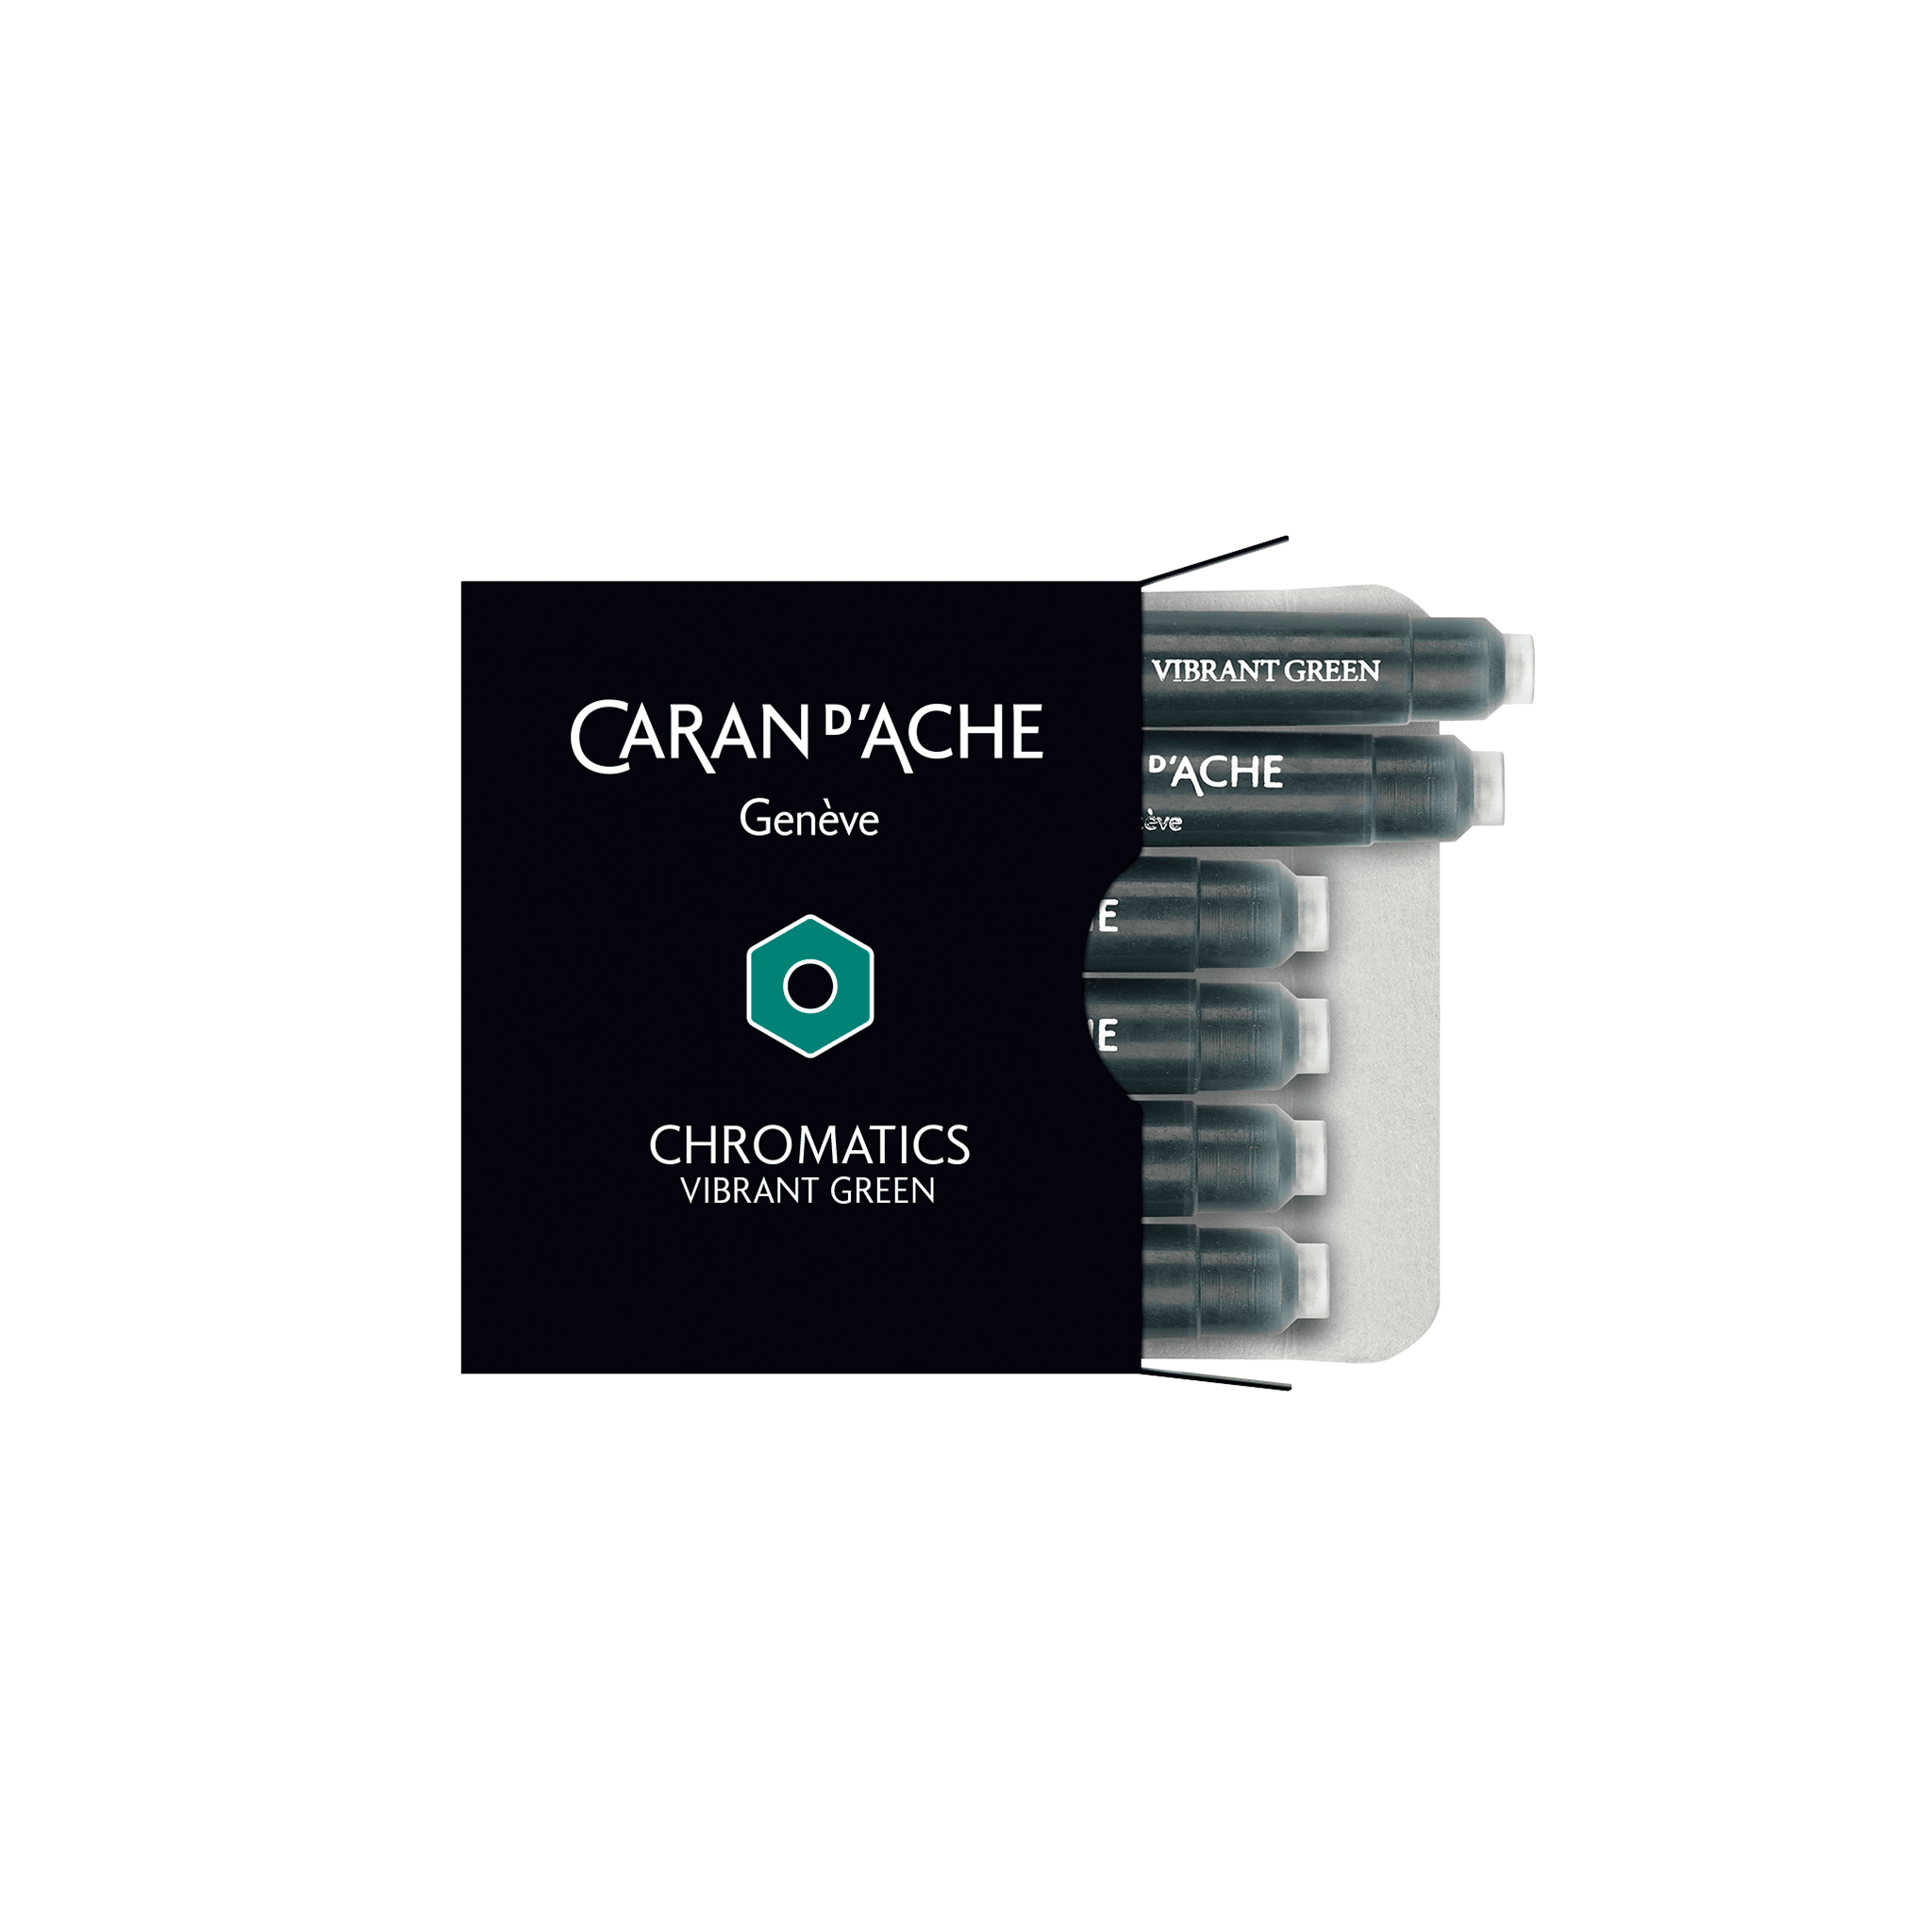 Caran d'Ache Chromatics Ink Cartridge Vibrant Green - Laywine's